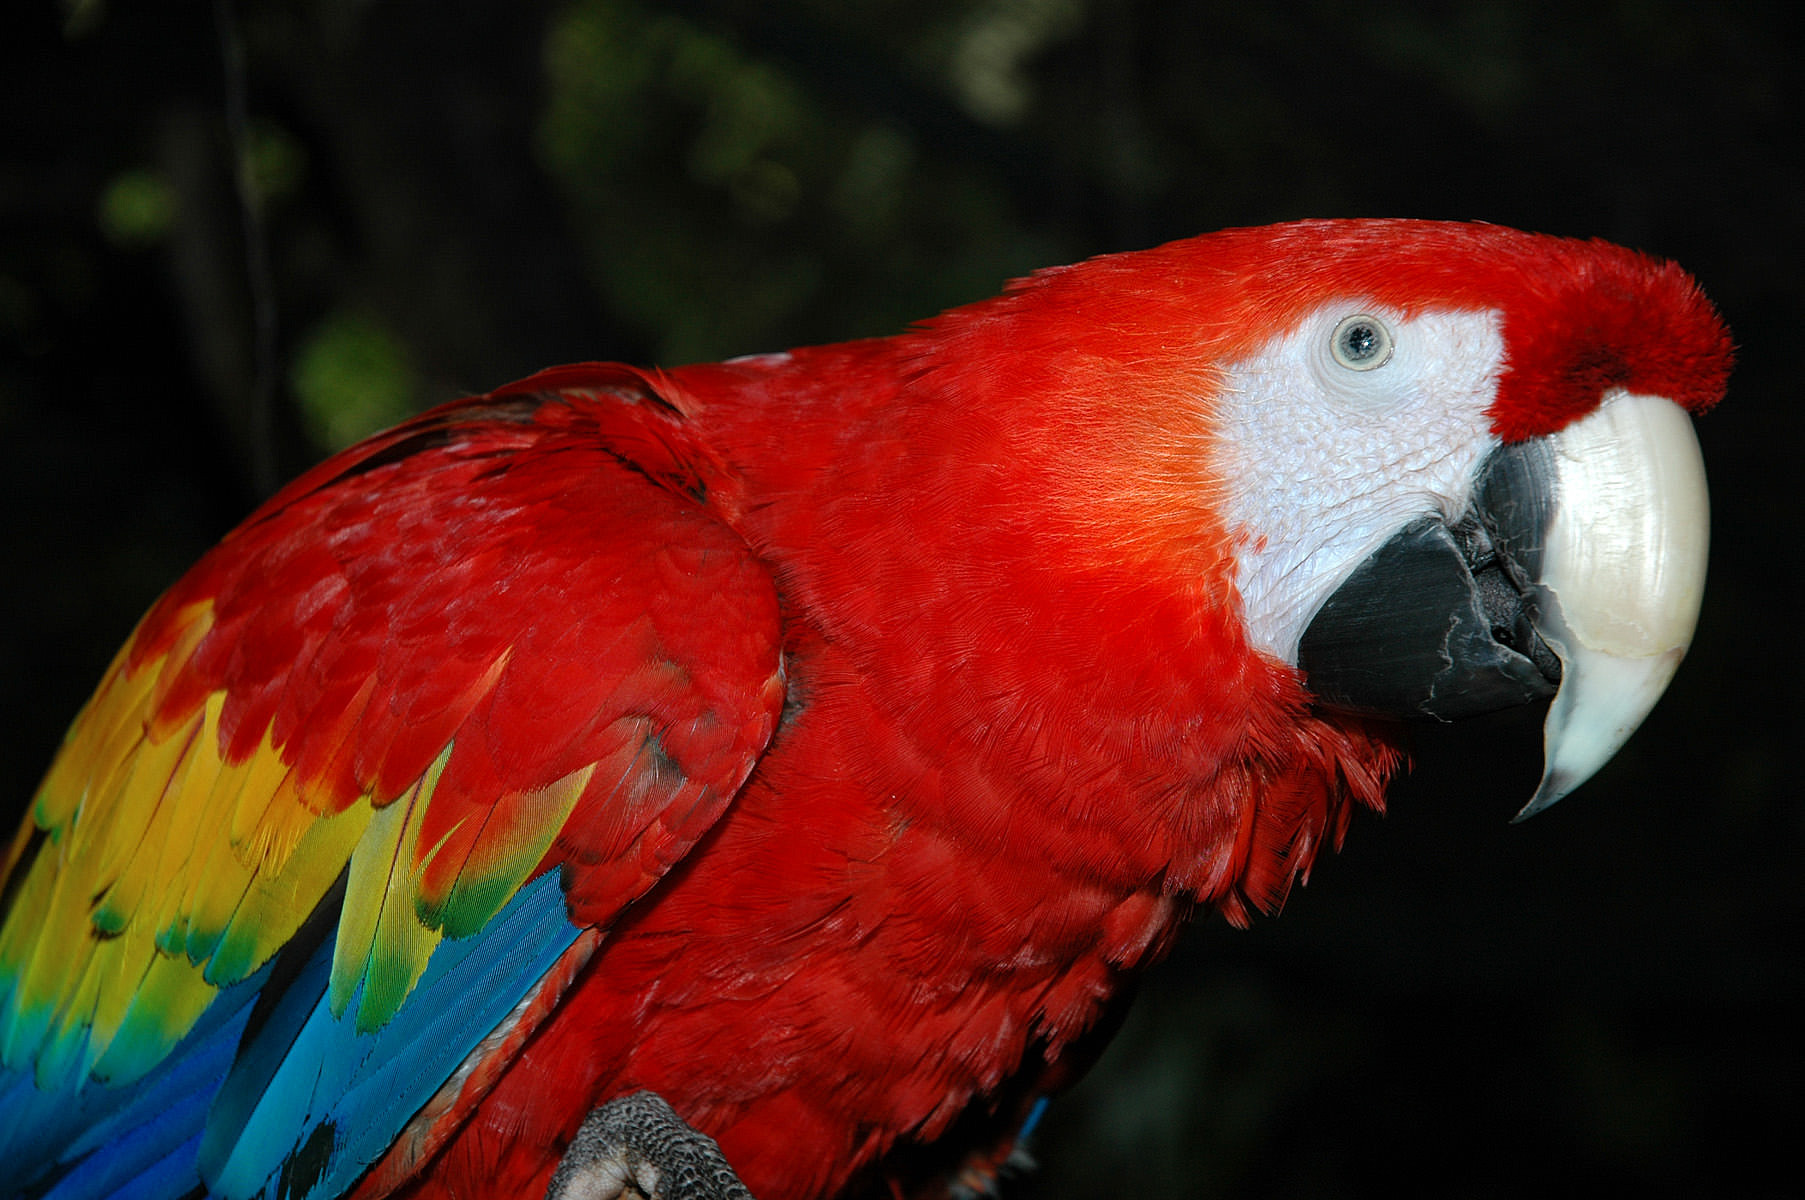 Lyserøde papegøjer i sydamerikanske kuppel: Randers Regnskov - Tropical Zoo